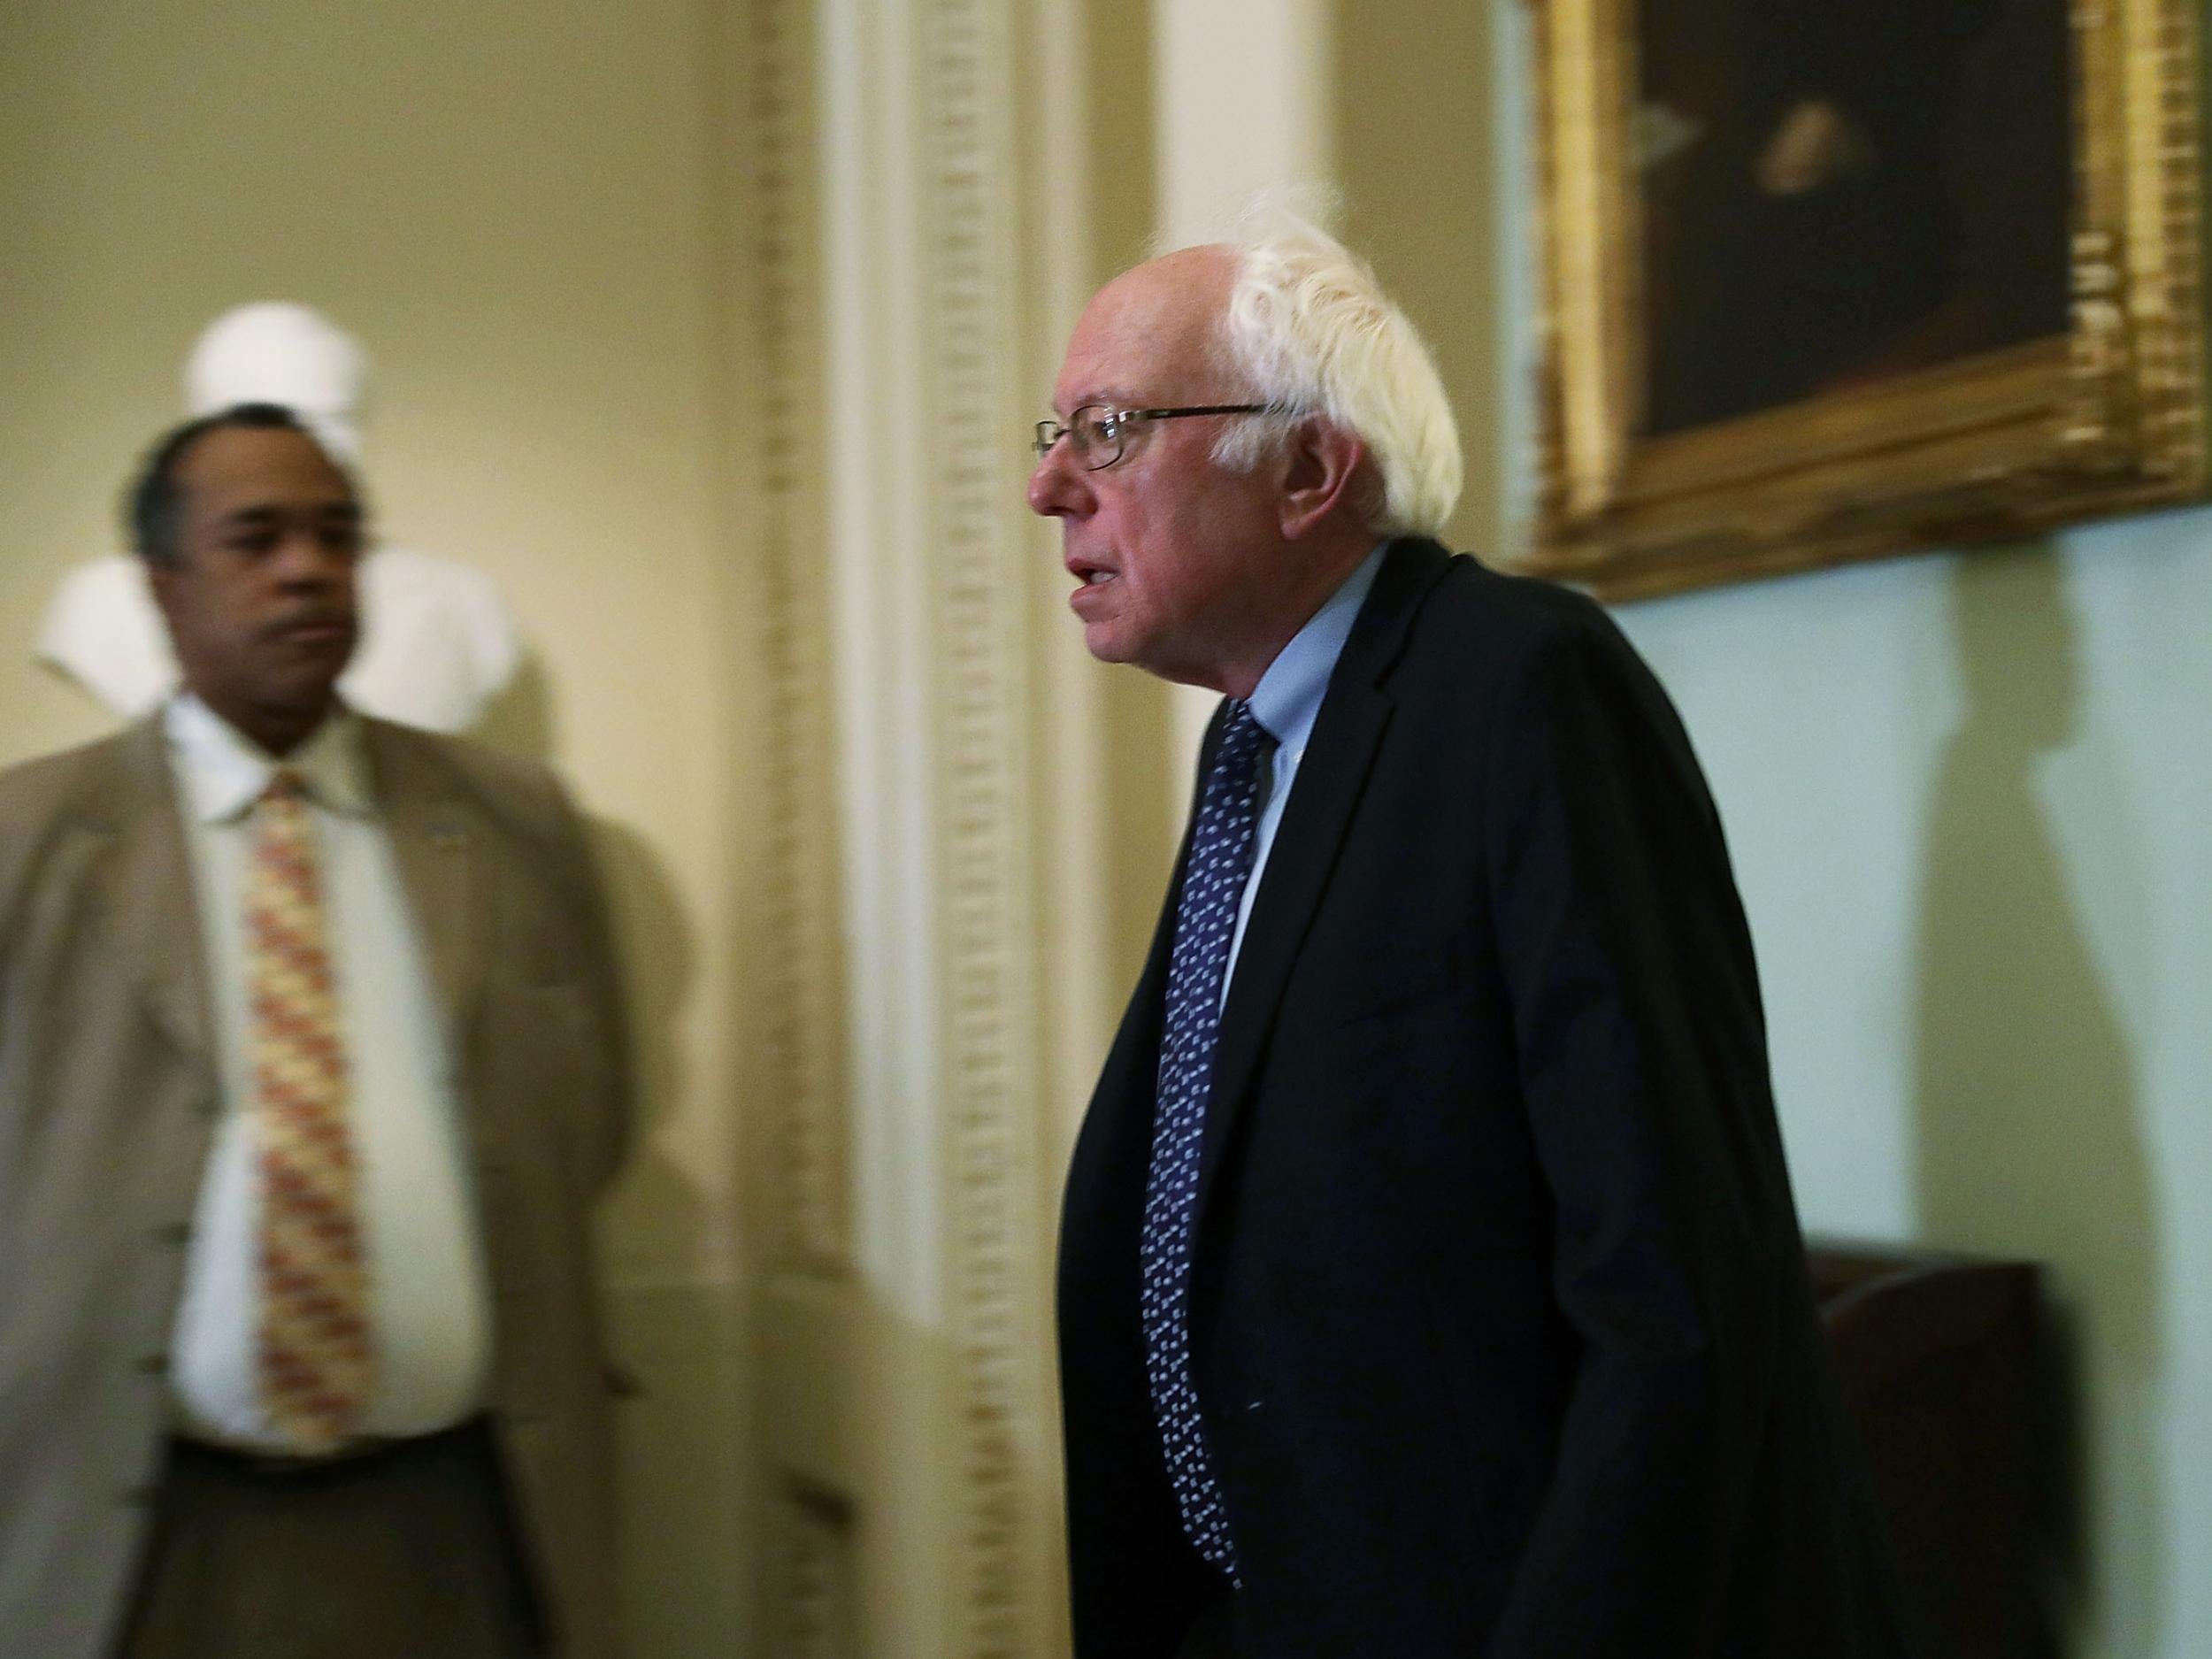 US Senator Bernie Sanders arrives at an election meeting of Senate Democrats at the Capitol November 16, 2016 in Washington, DC